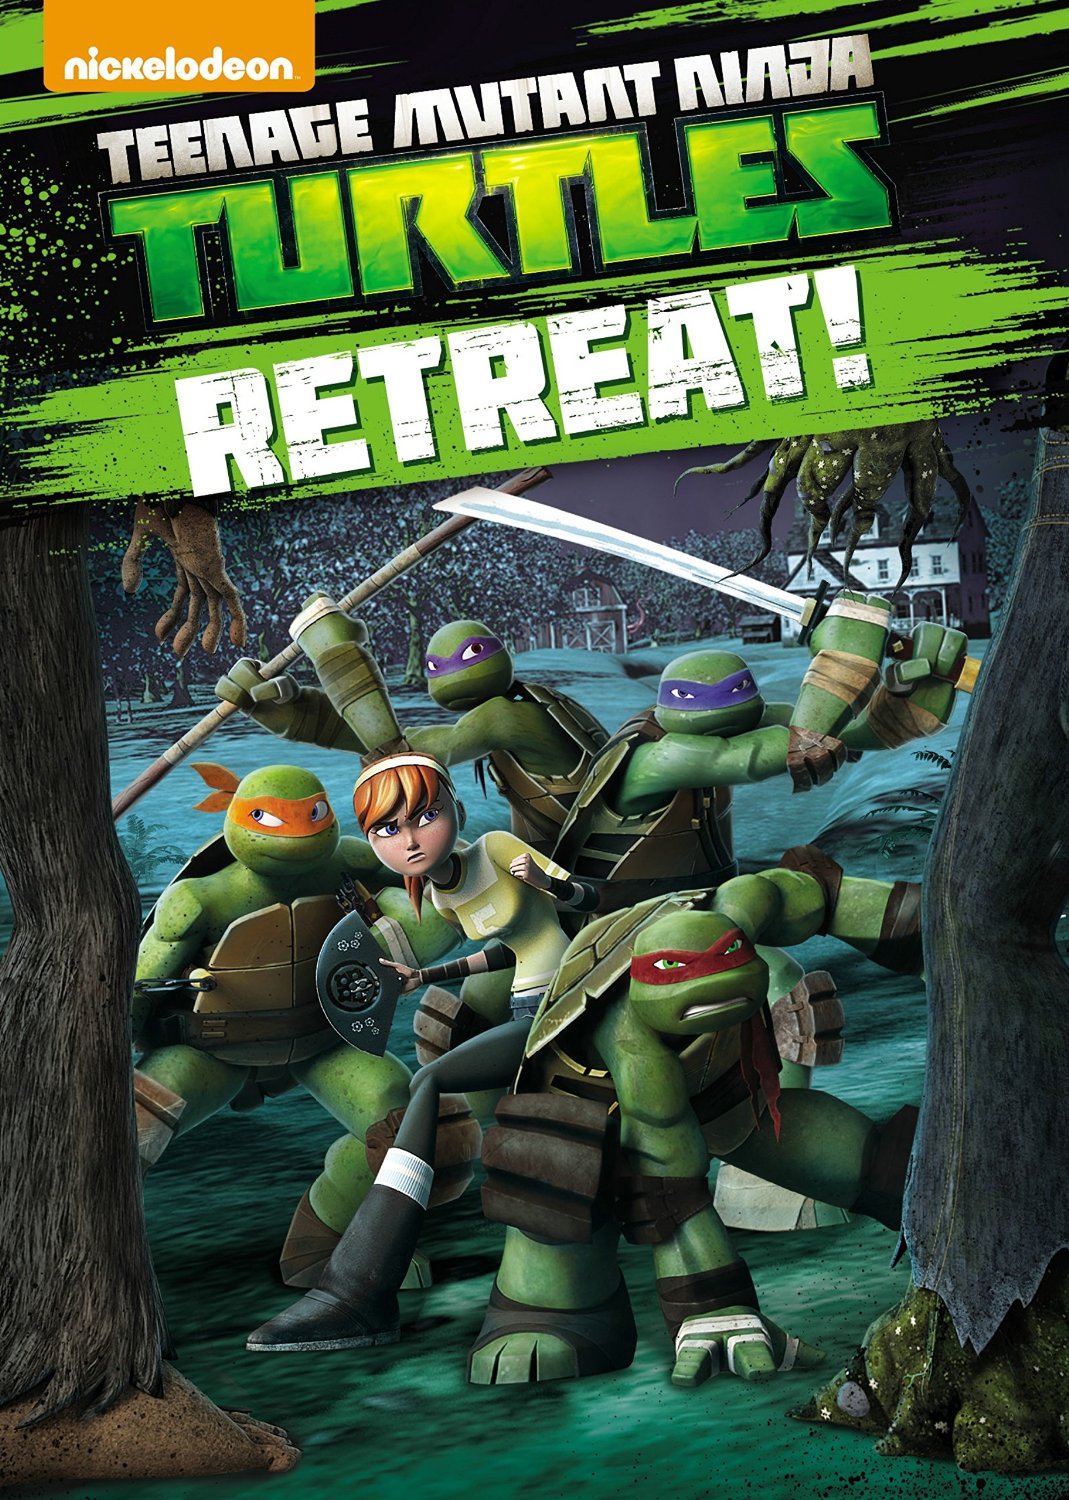 http://www.rotoscopers.com/wp-content/uploads/2015/03/teenage-mutant-ninja-turtles-retreat.jpg